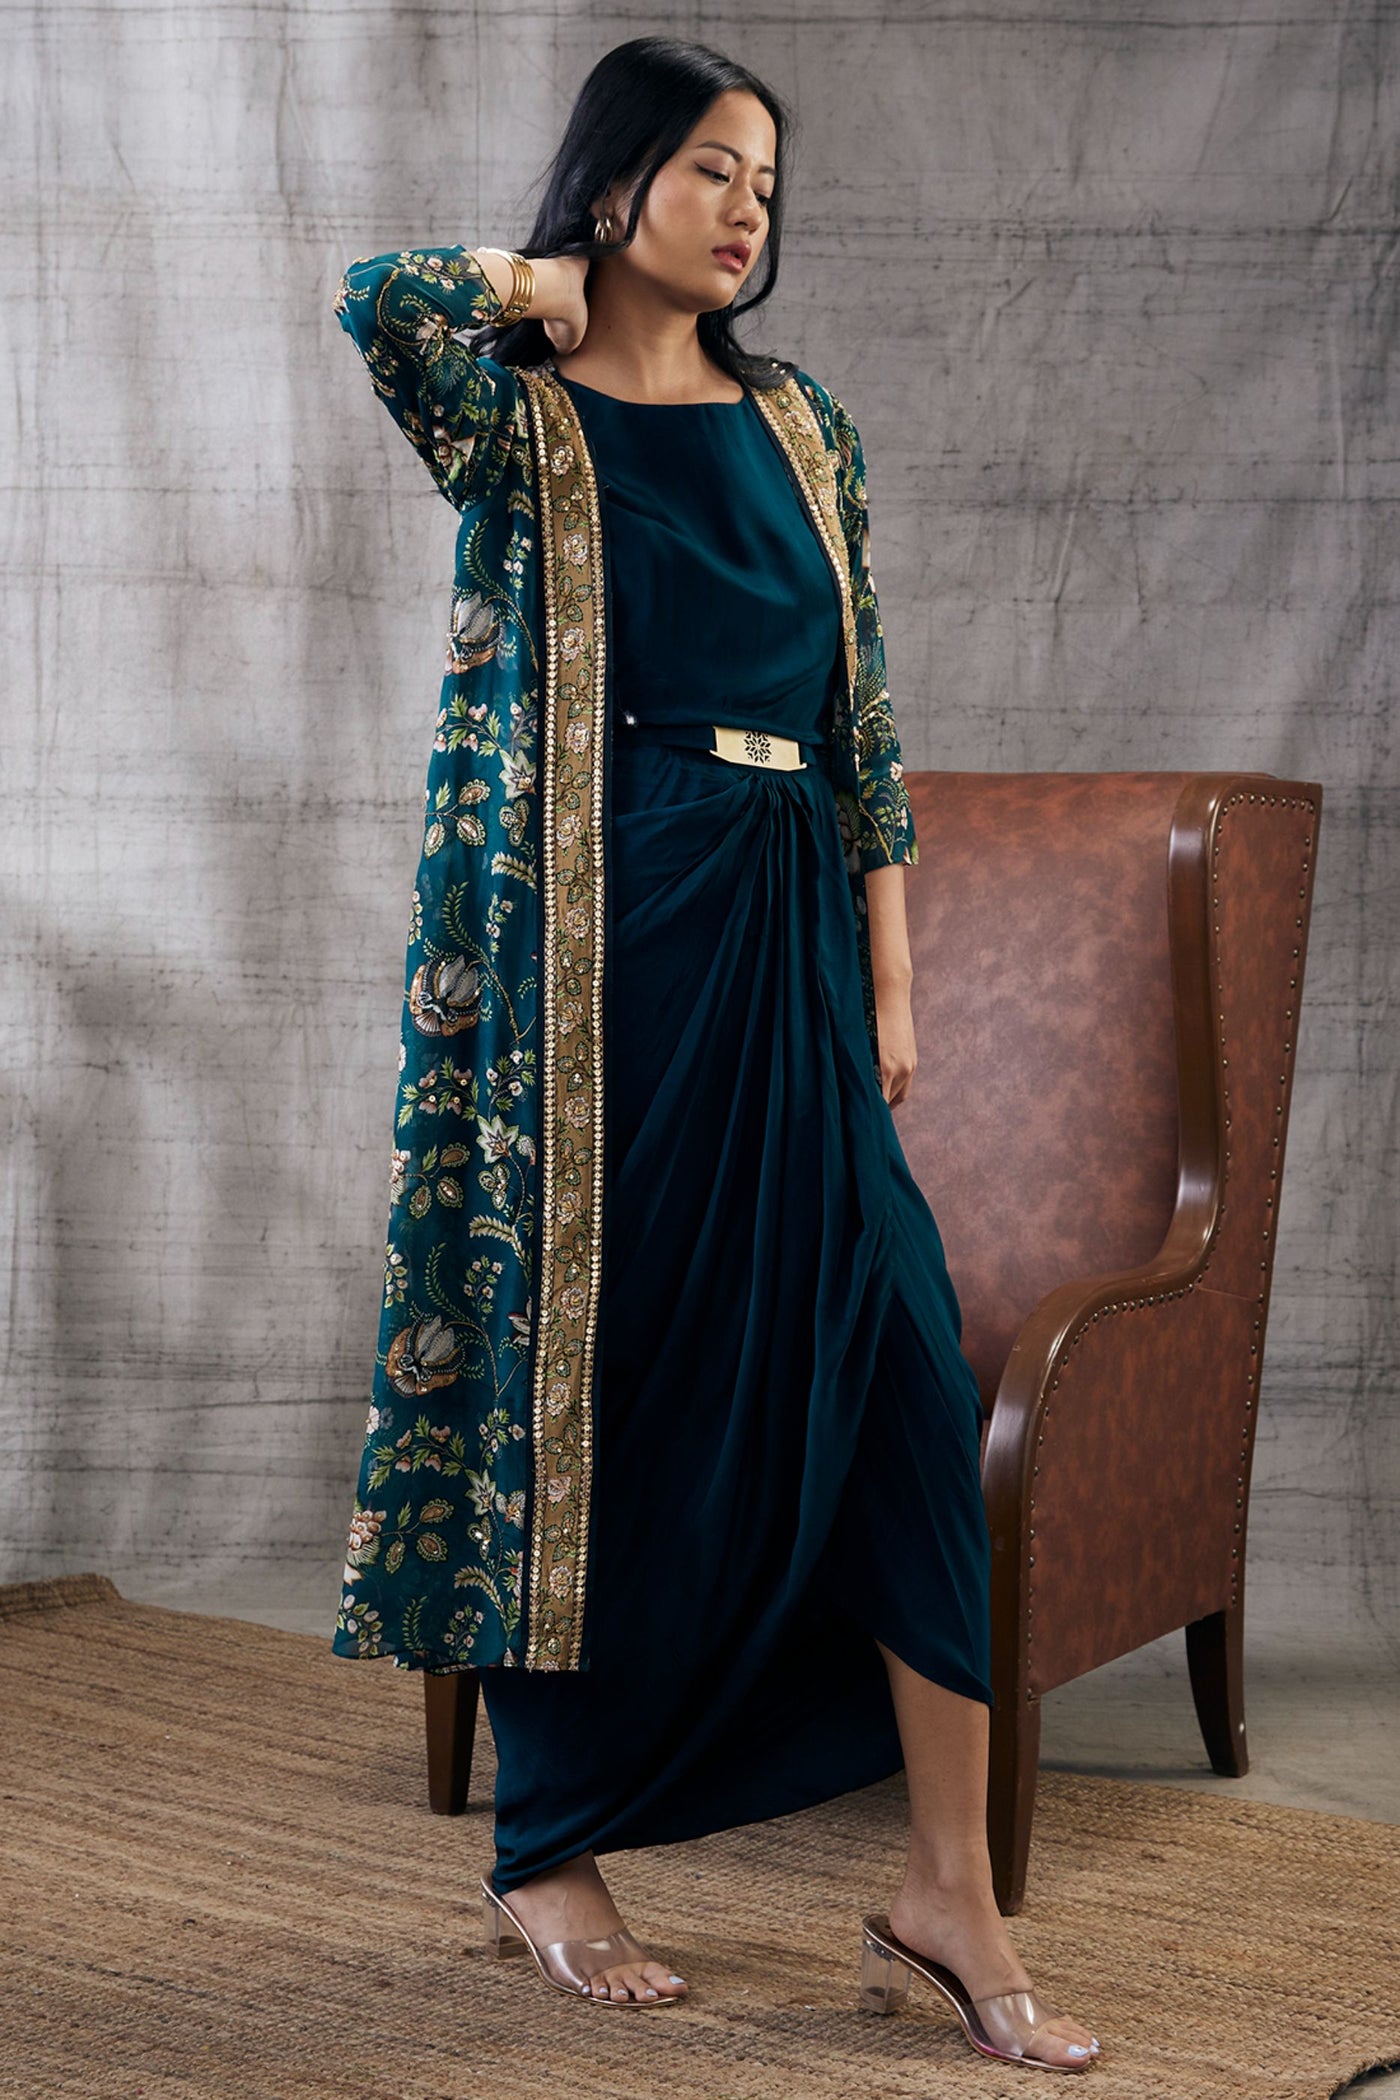 Sougat Paul Mehra Drape Dress With Printed Jacket Indian designer wear online shopping melange singapore